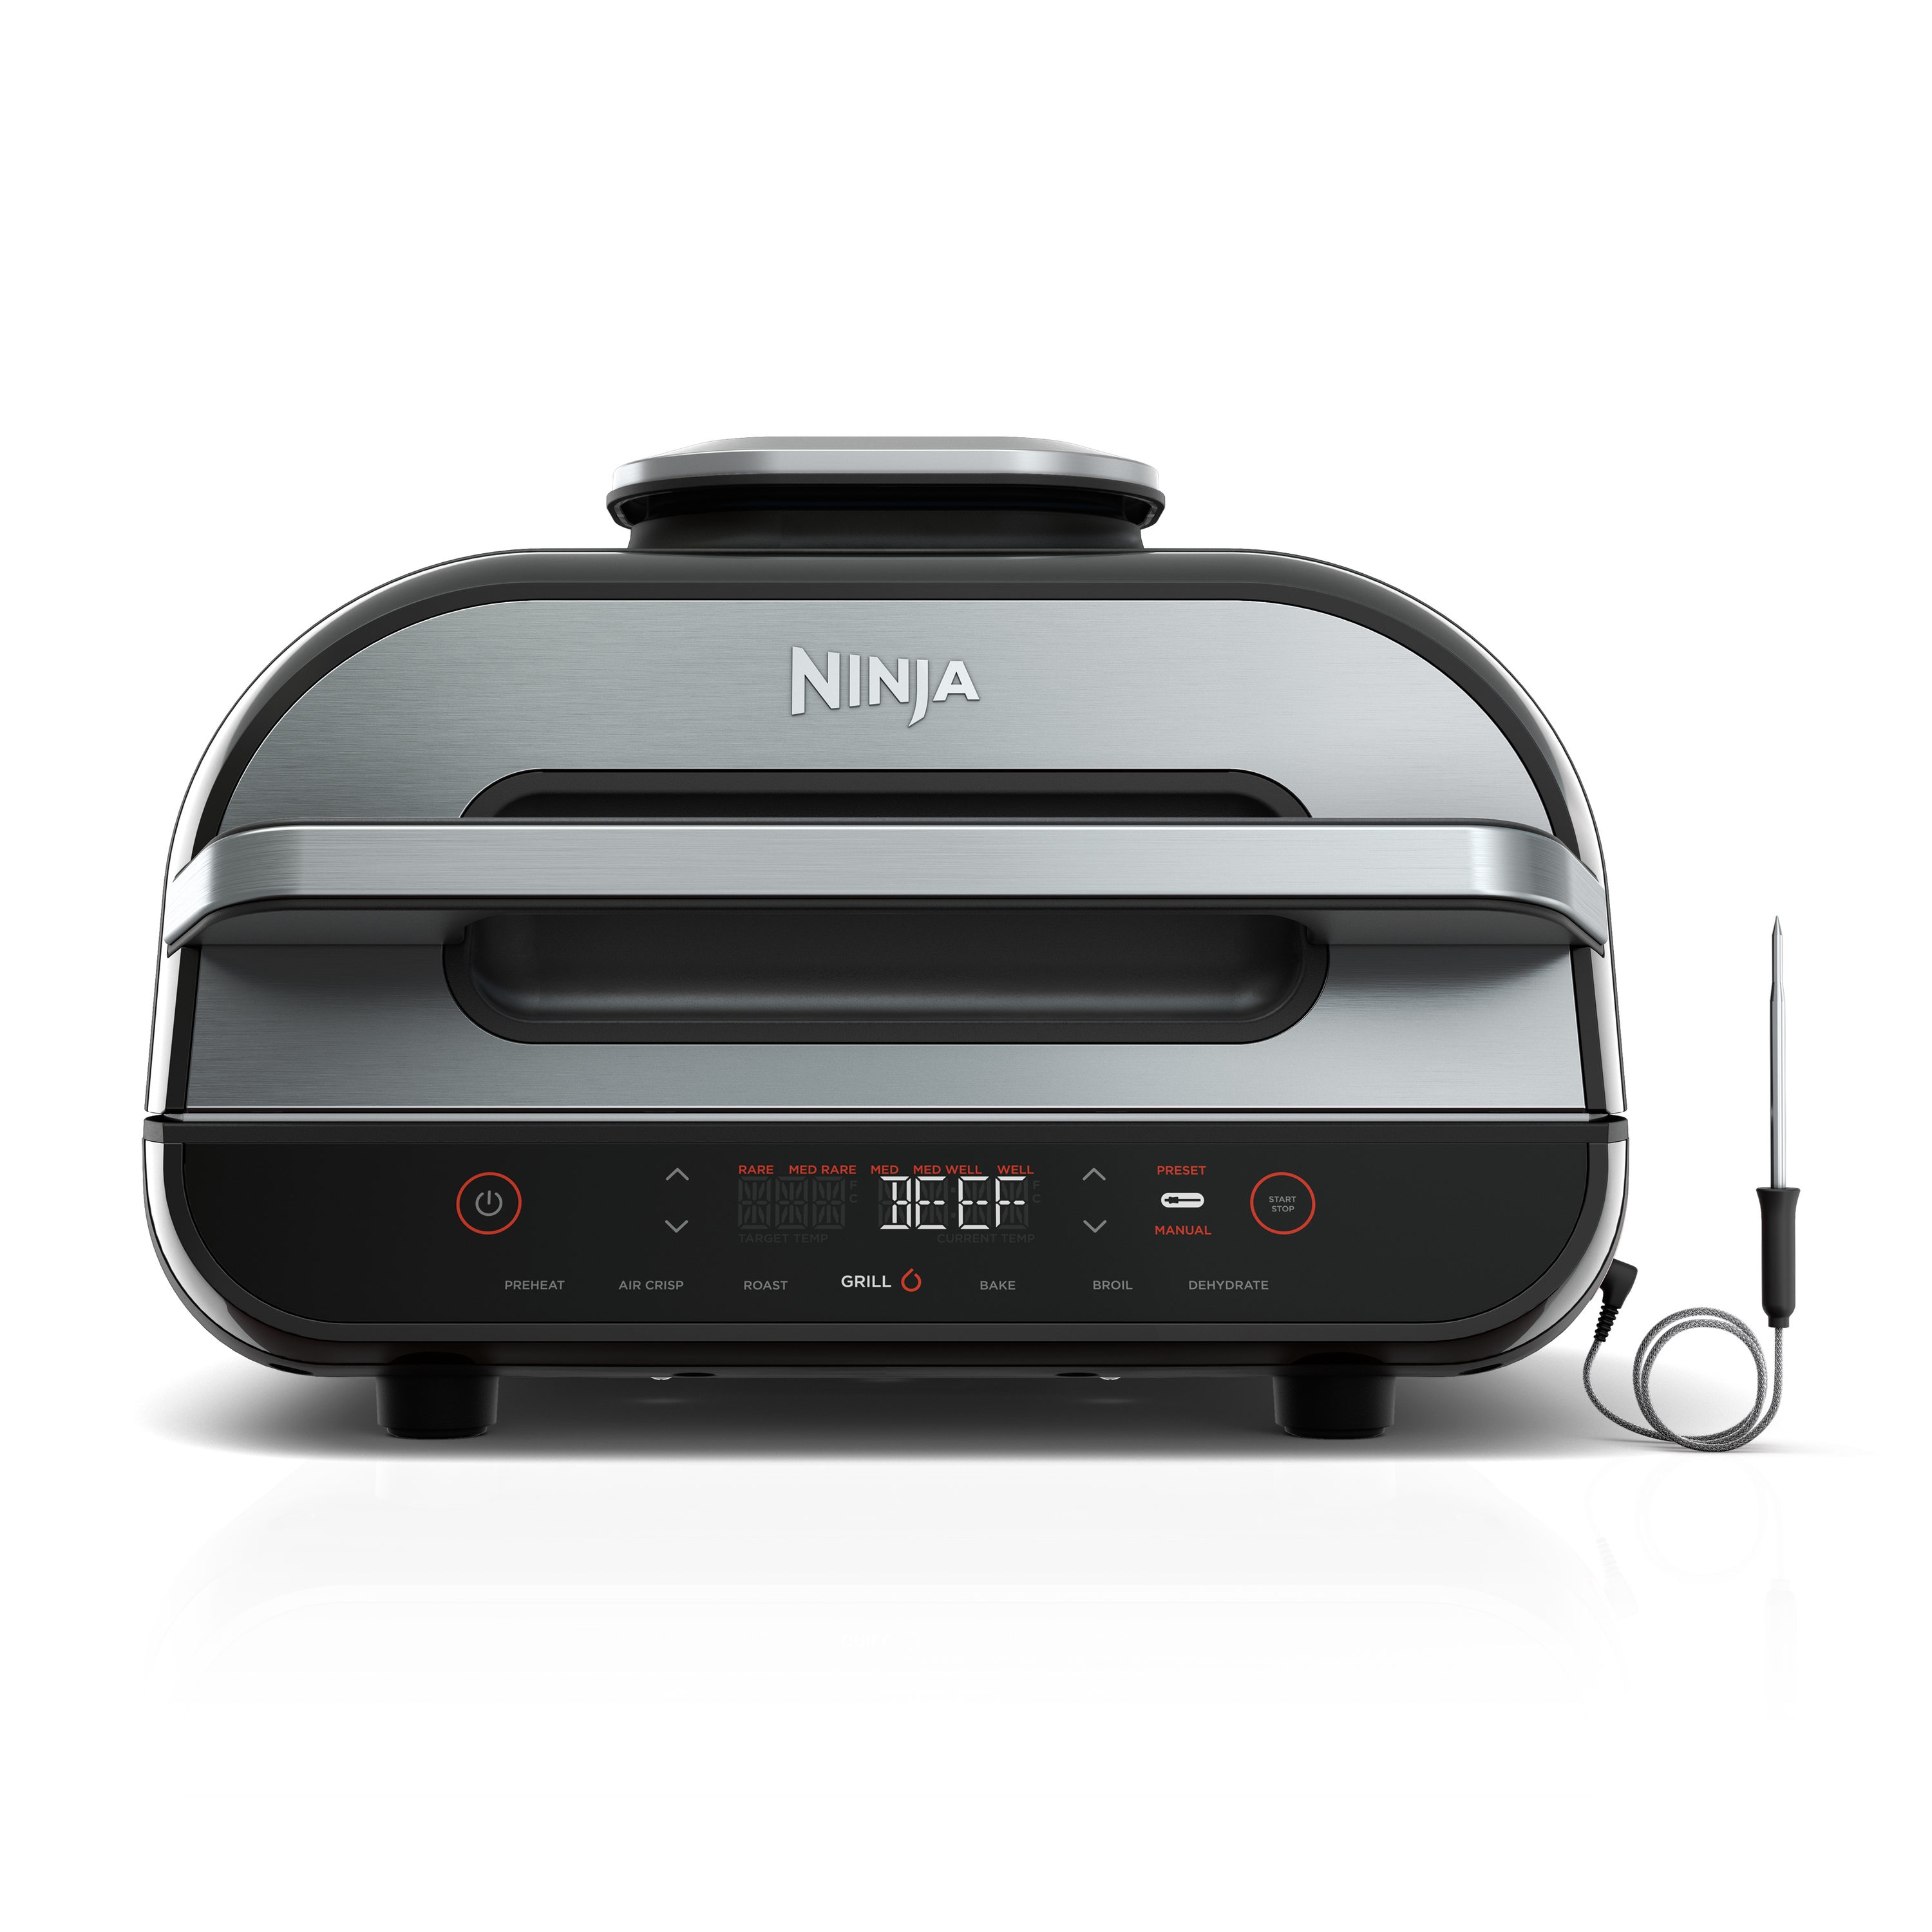 Ninja Ig651 Foodi Smart XL Pro 7-in-1 Indoor Grill/Griddle Combo Black